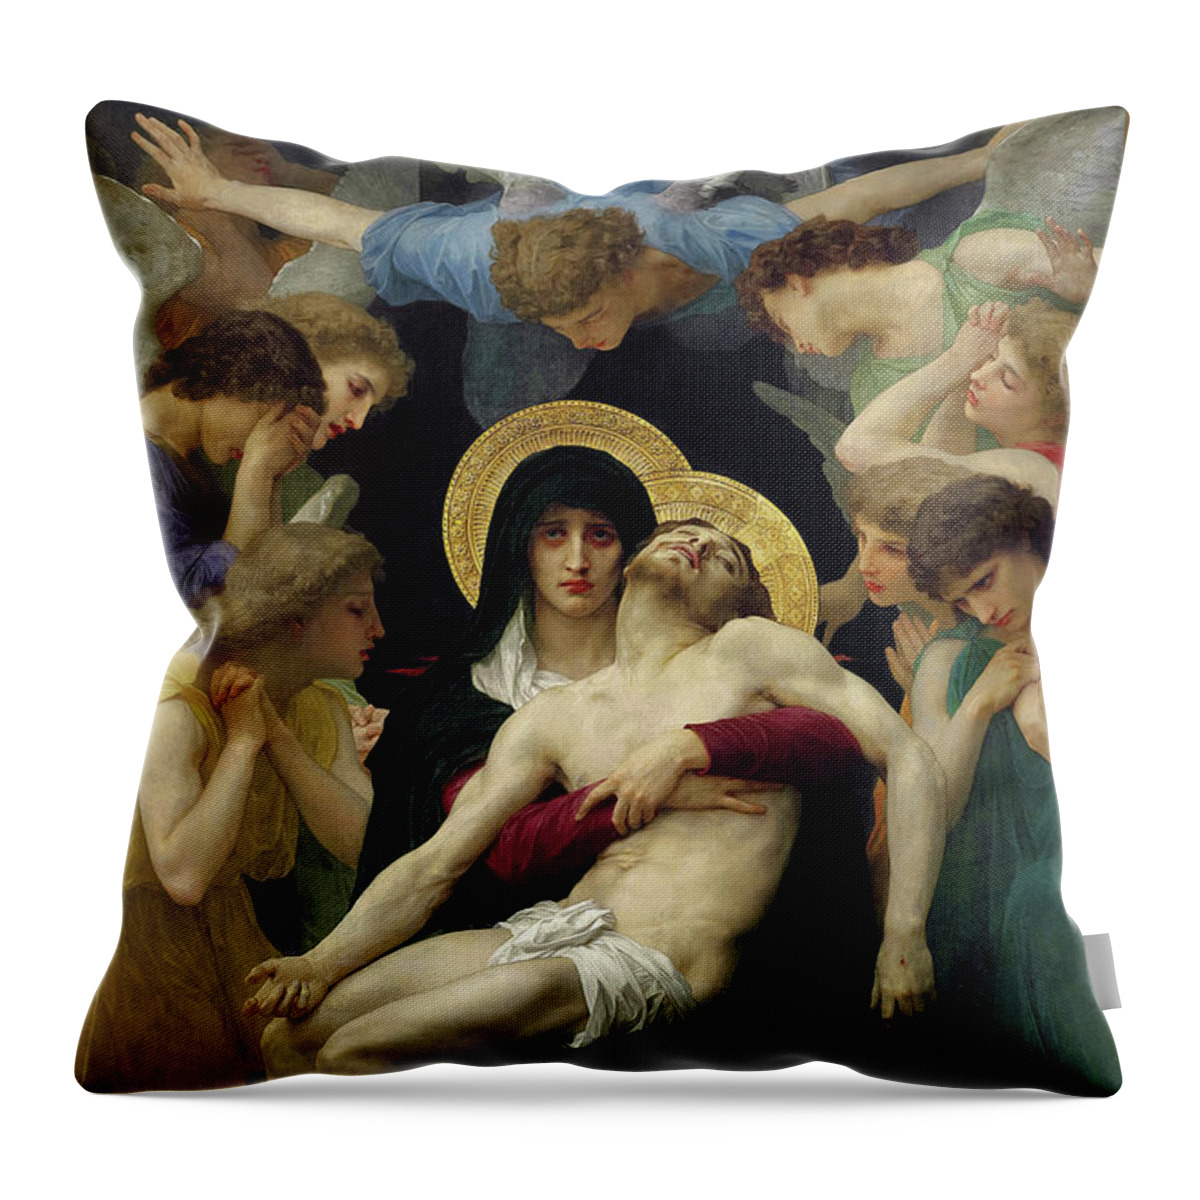 Bouguereau Pieta Throw Pillow featuring the painting Pieta, 1876 by William-Adolphe Bouguereau